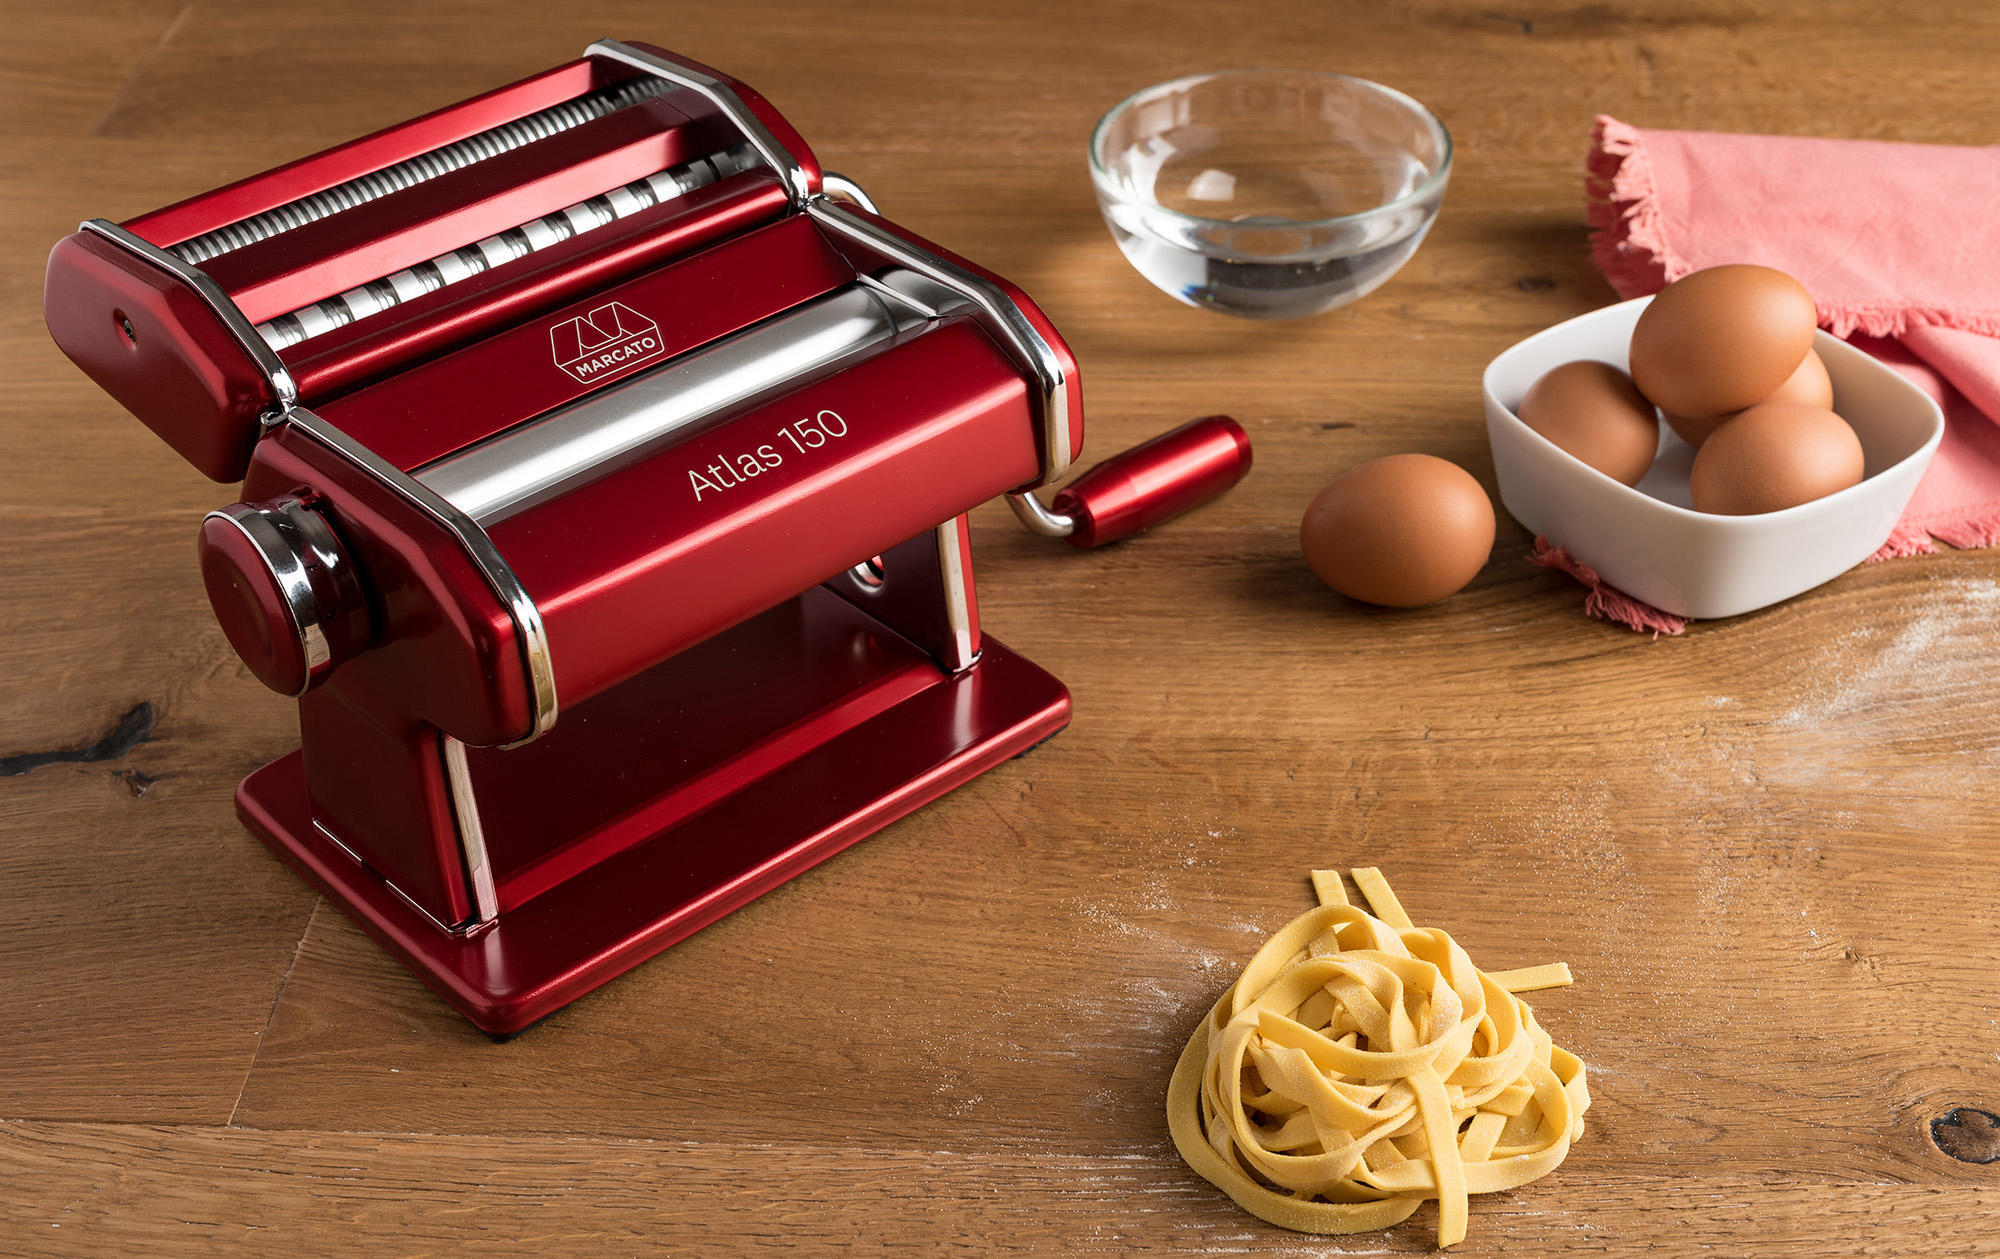 Marcato Atlas 150 Pasta Machine - Interismo Online Shop Global